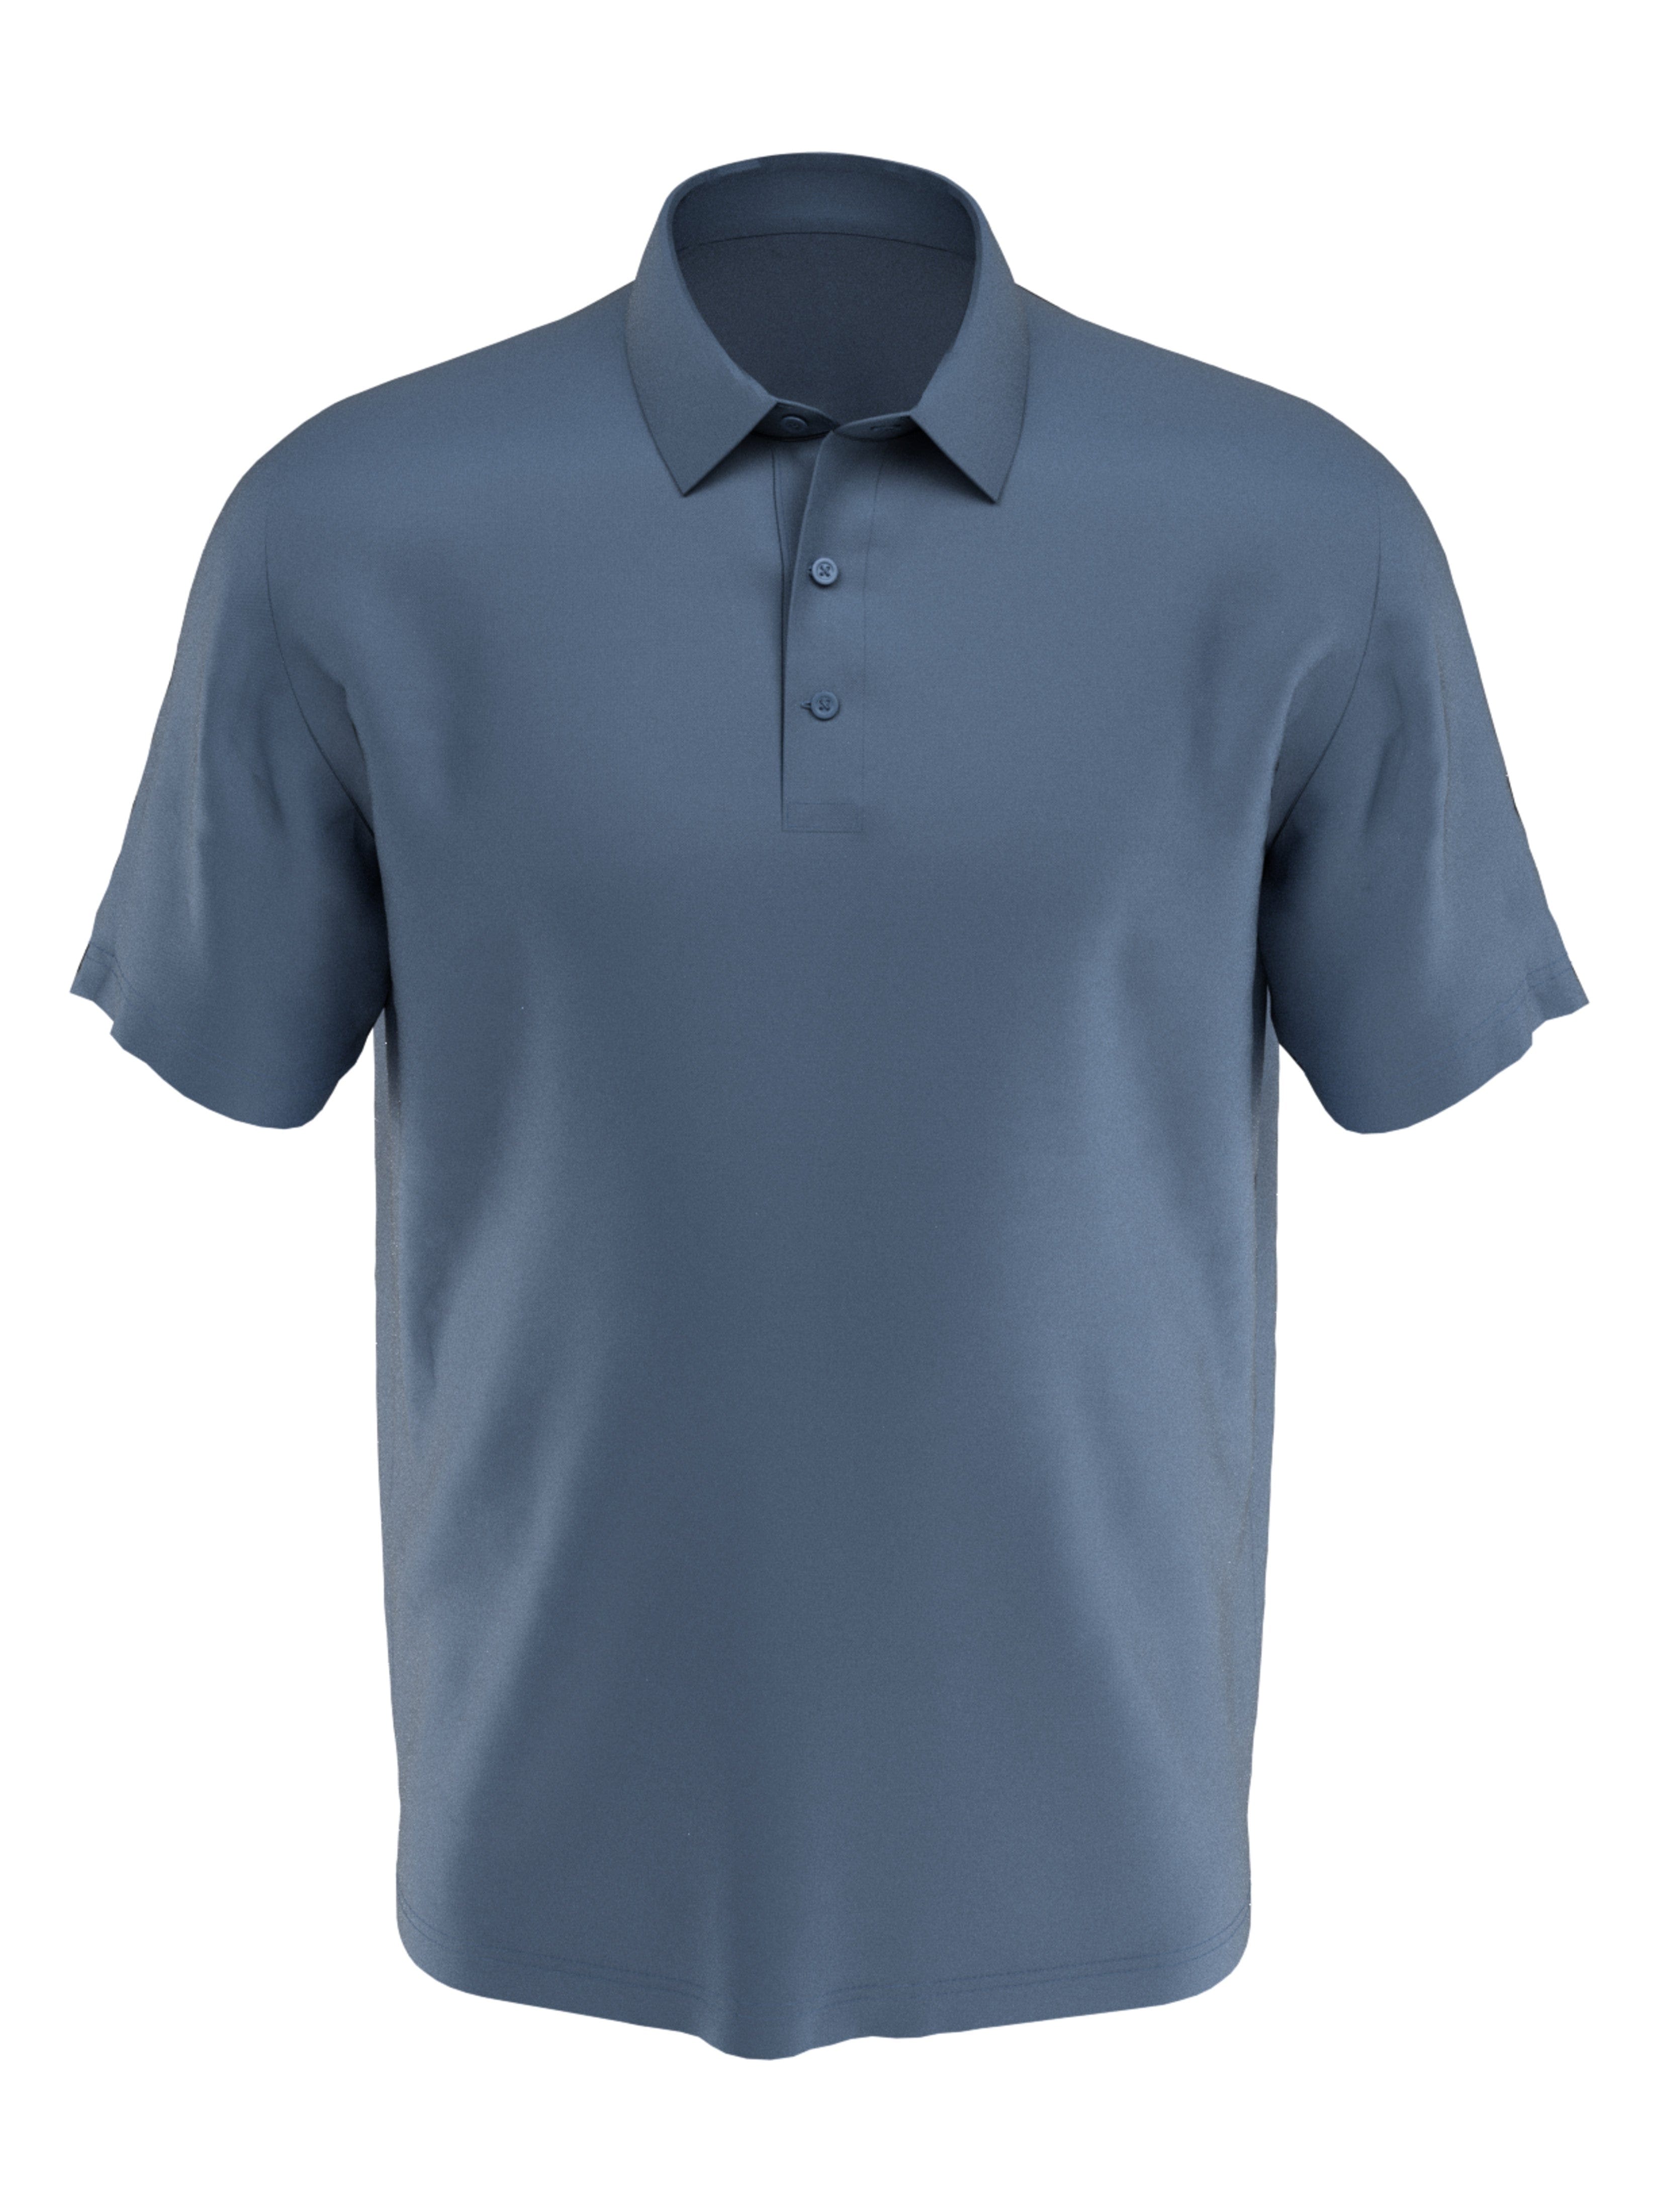 Callaway Apparel Mens Big & Tall Solid Swing Tech Golf Polo Shirt, Size 4XLT, Blue Horizon, Polyester/Elastane | Golf Apparel Shop